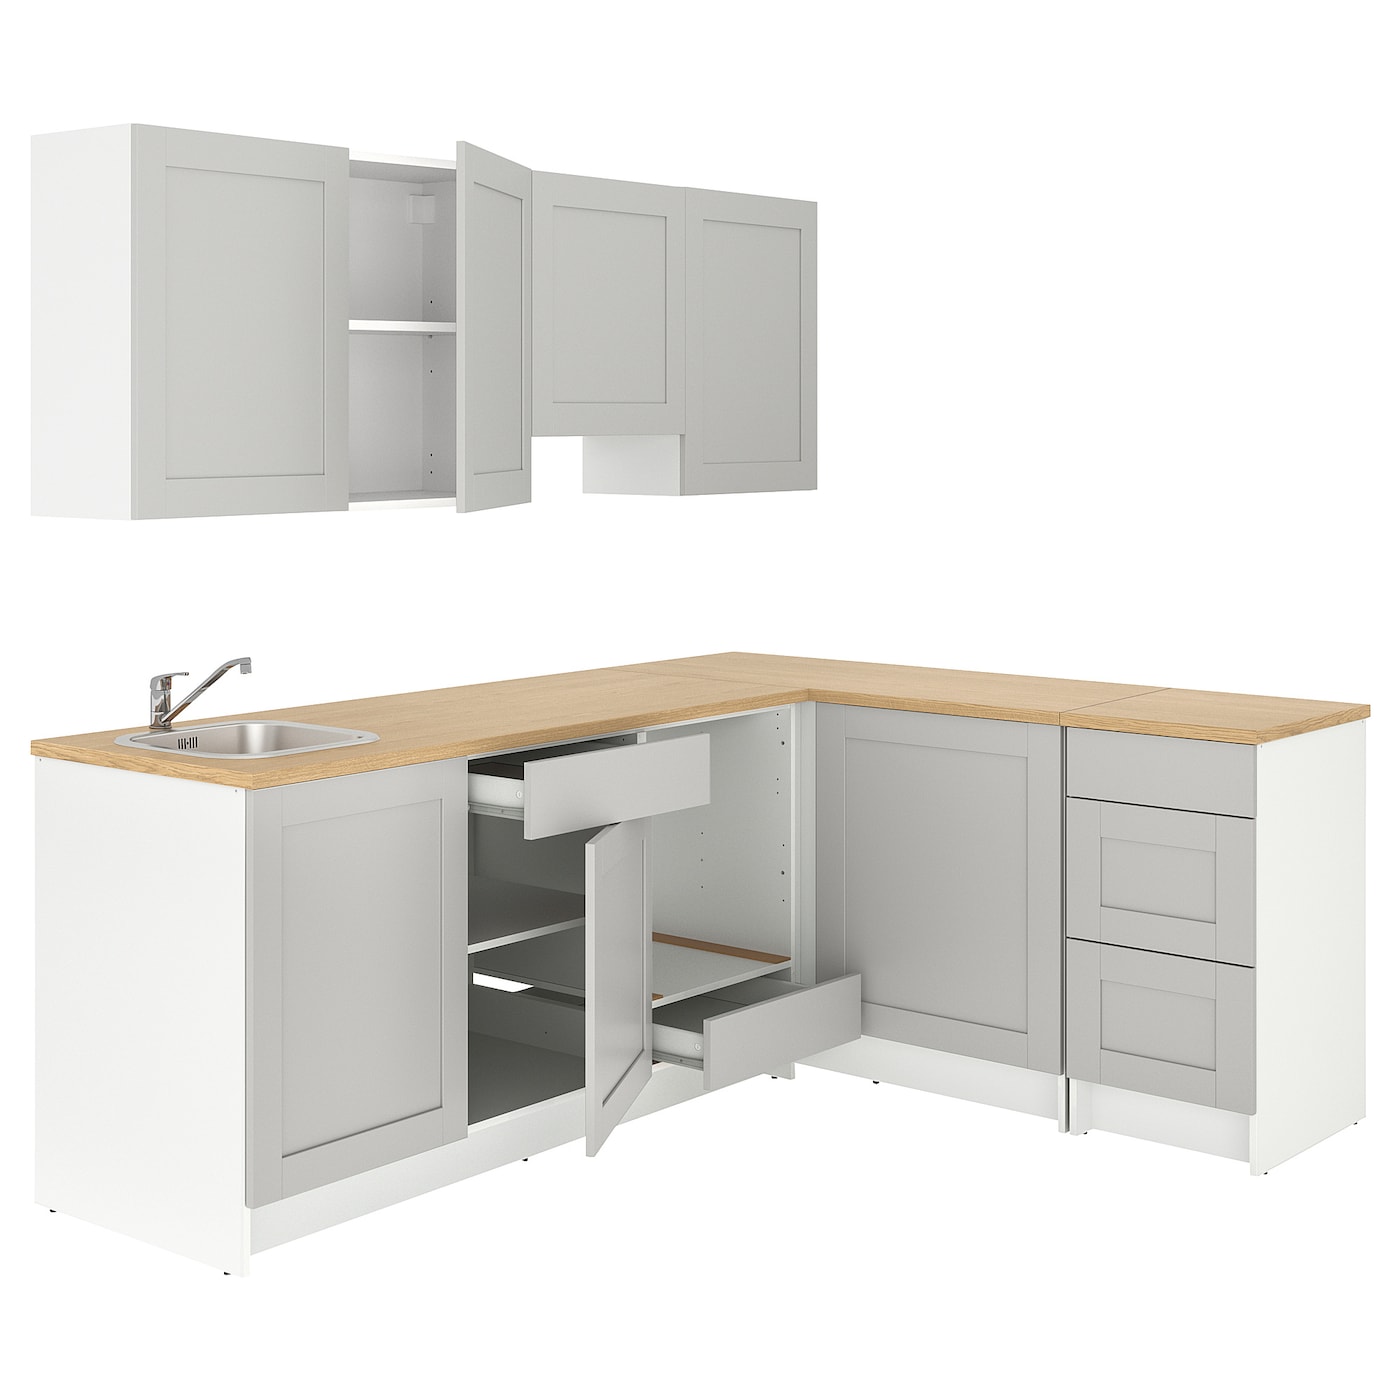 Угловая кухня -  KNOXHULT IKEA/ КНОКСХУЛЬТ ИКЕА, 243х220 см, белый/серый/бежевый